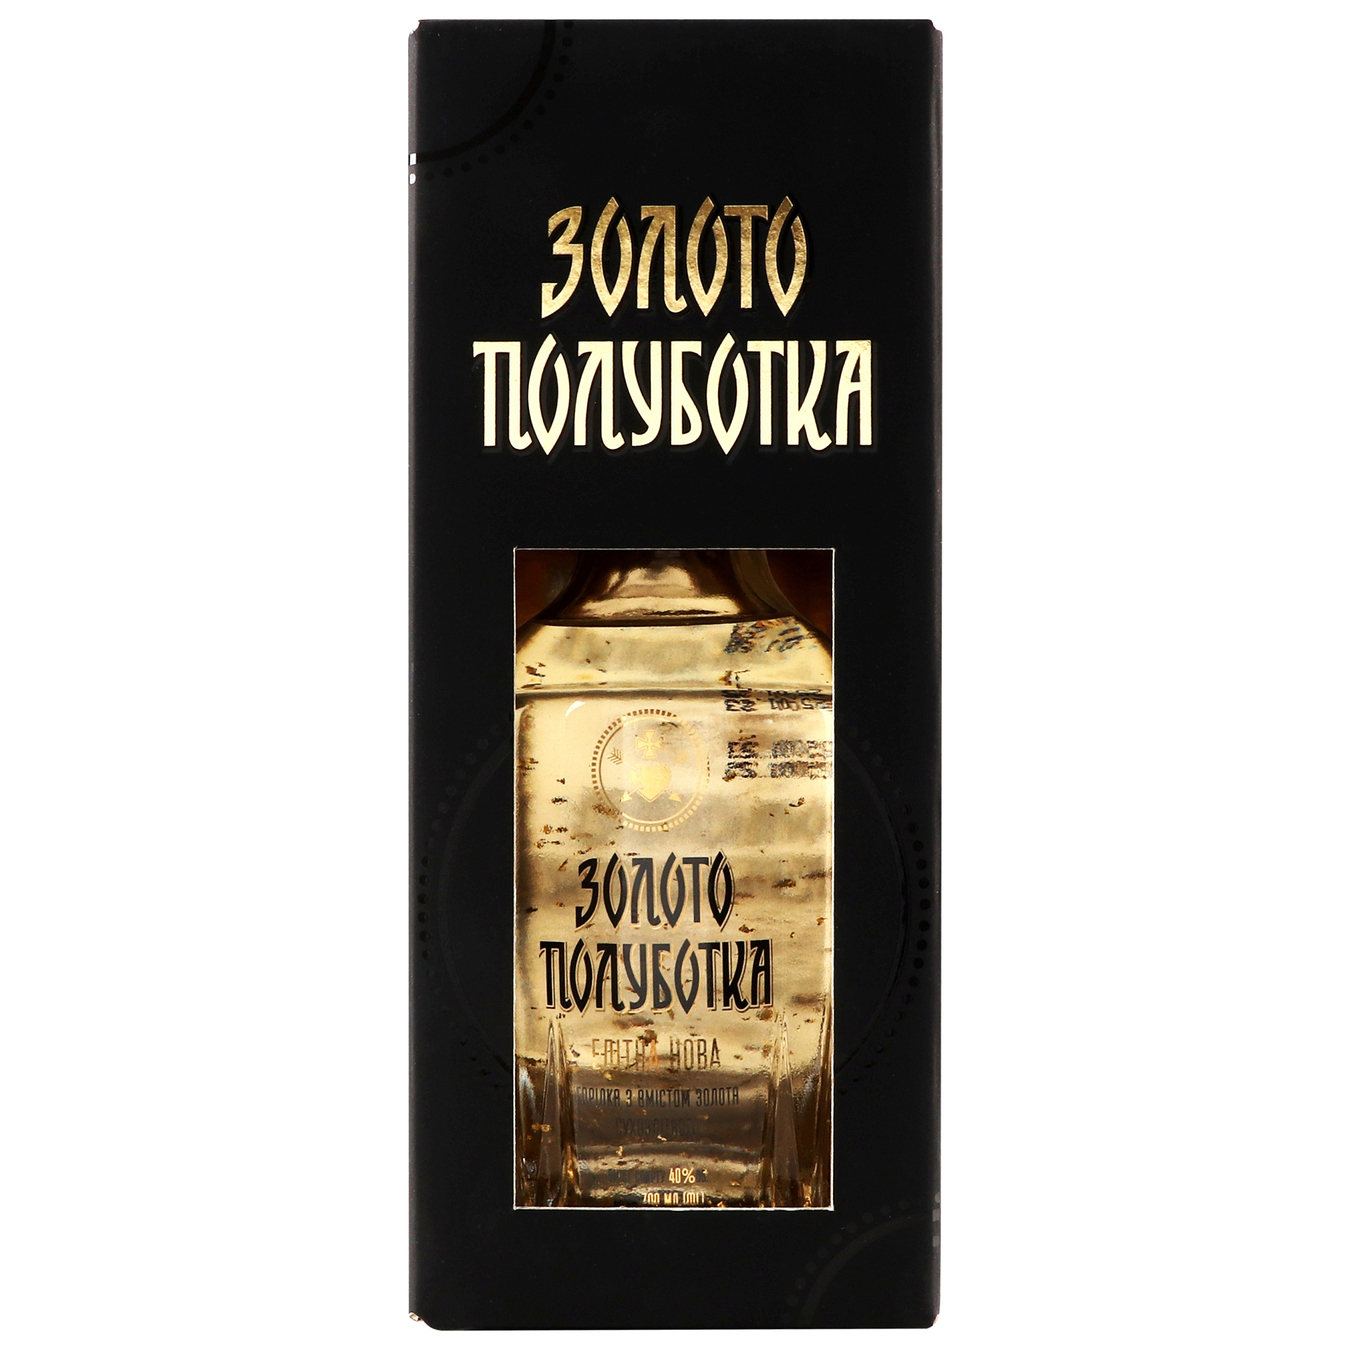 Vodka Zoloto Polubotka 40% 0.7l in a box